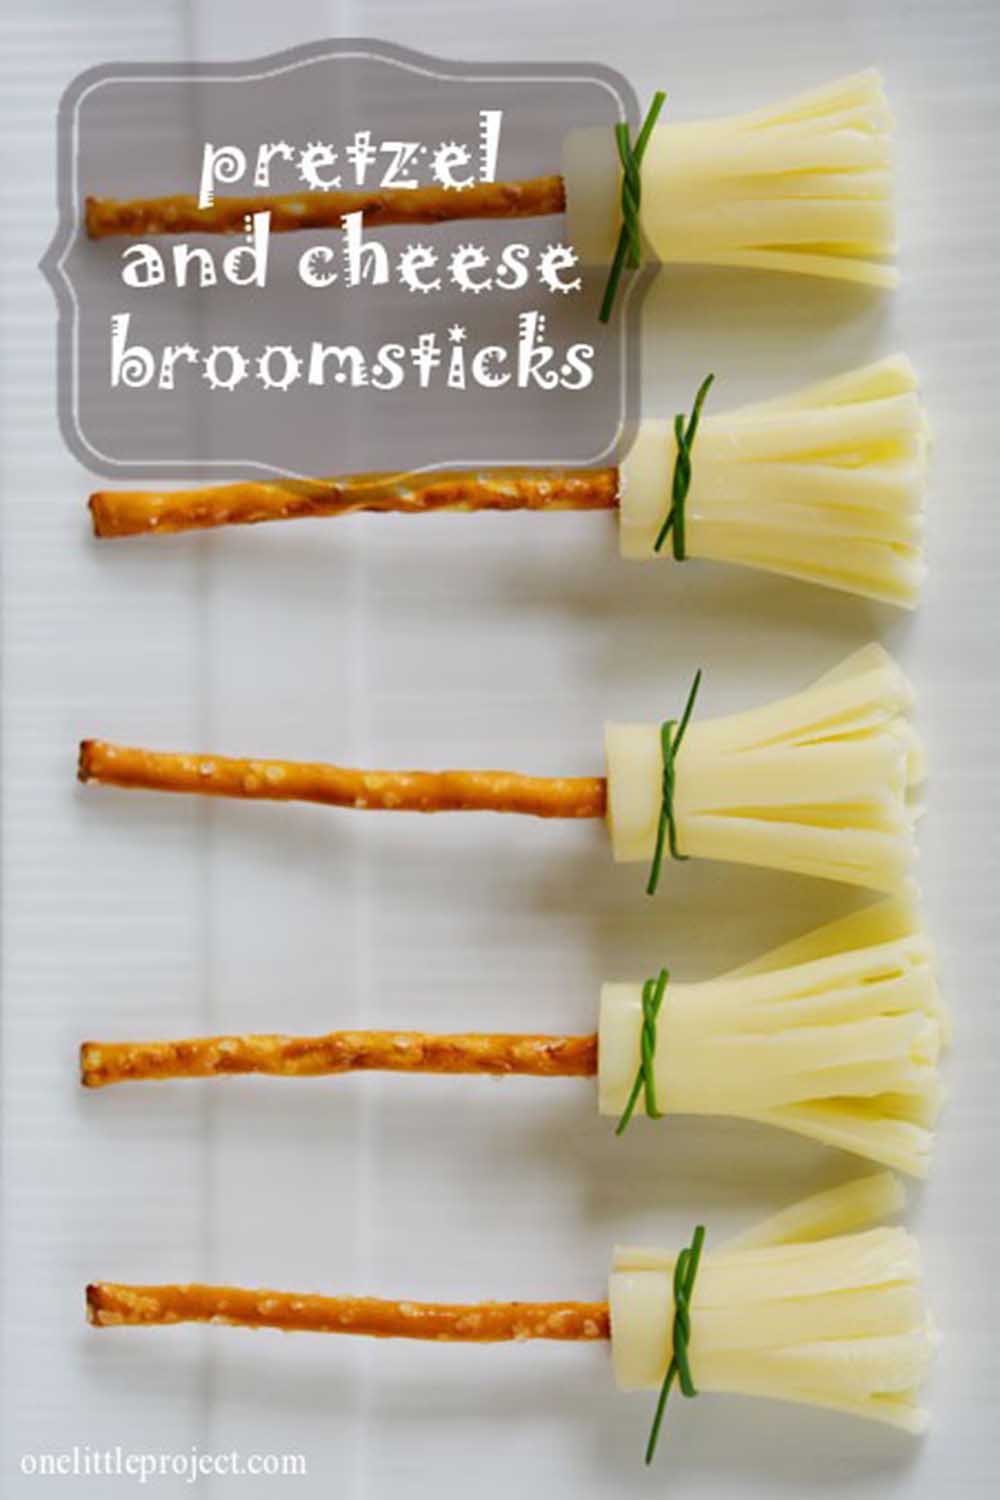 disney princess party food cinderella's broomsticks